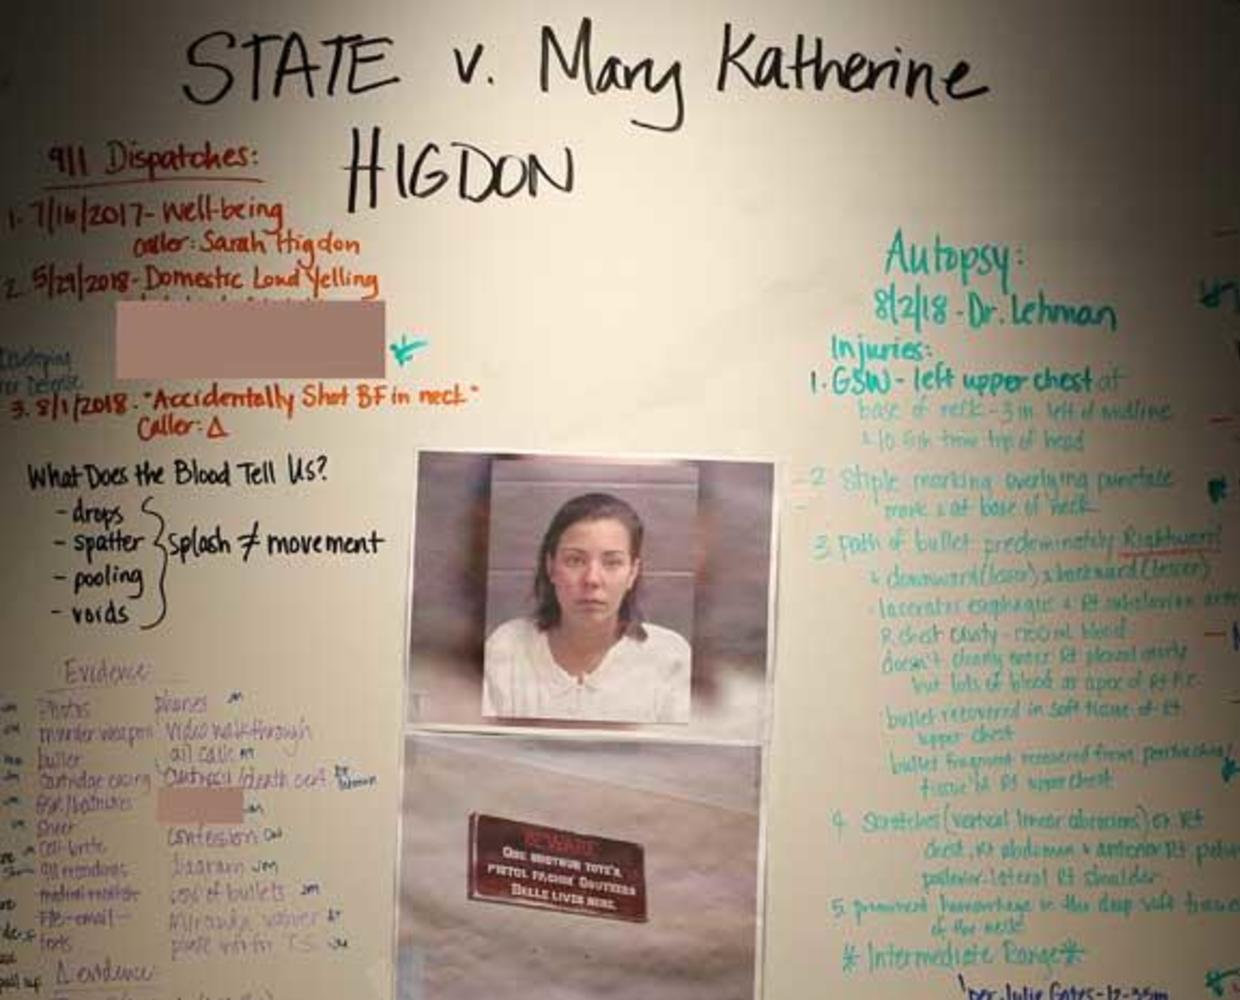 Evidence photos in the case against Mary Katherine Higdon CBS News